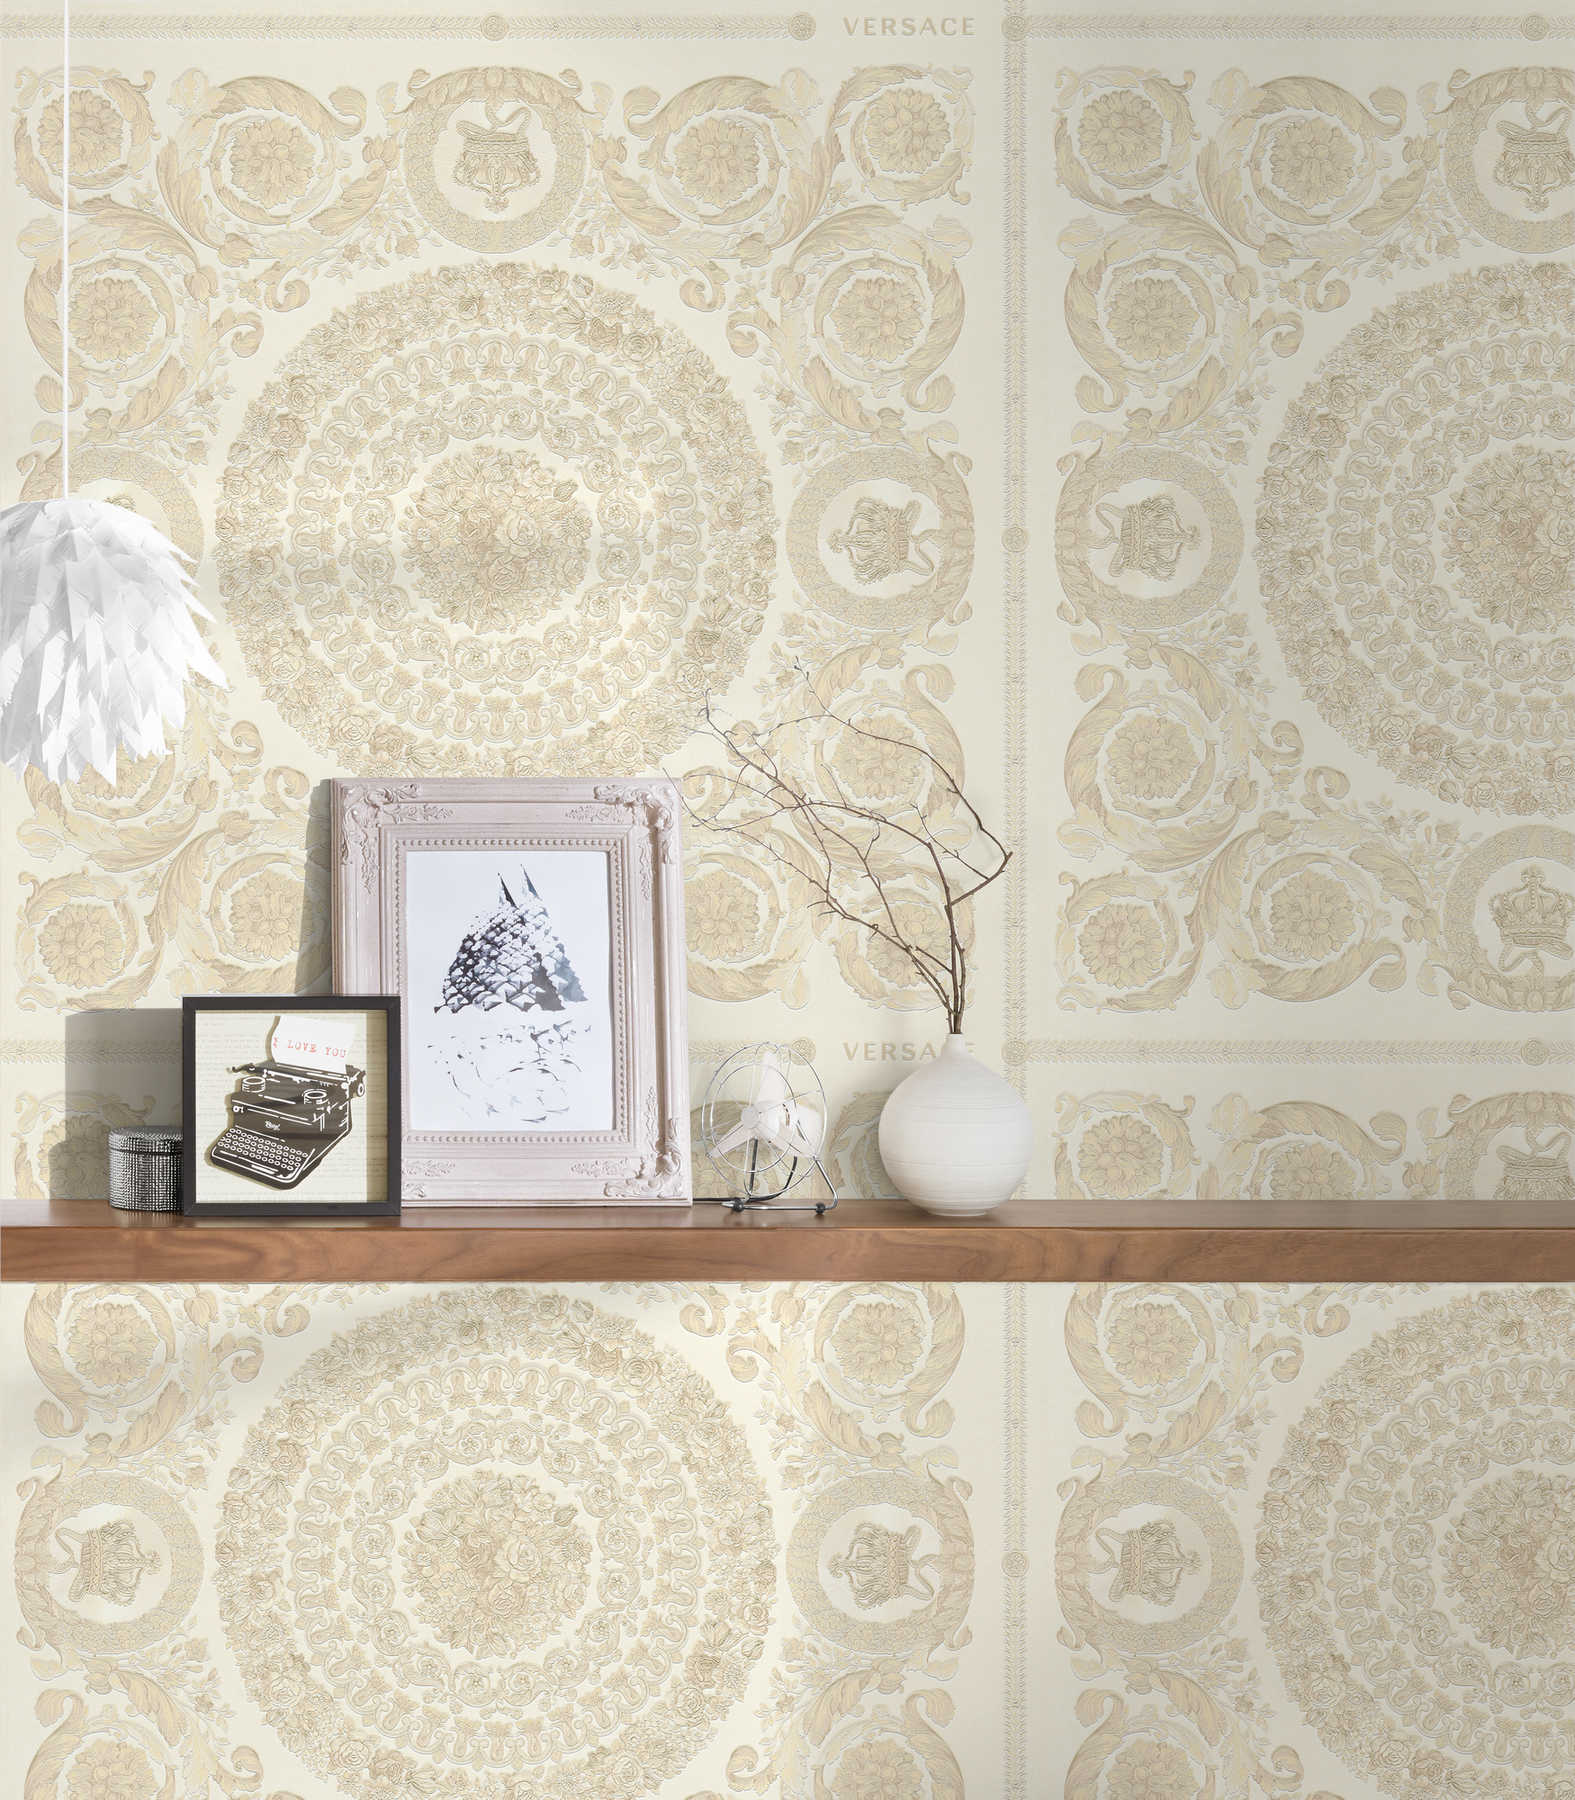             Luxury VERSACE Home wallpaper crowns & roses - beige, silver, cream
        